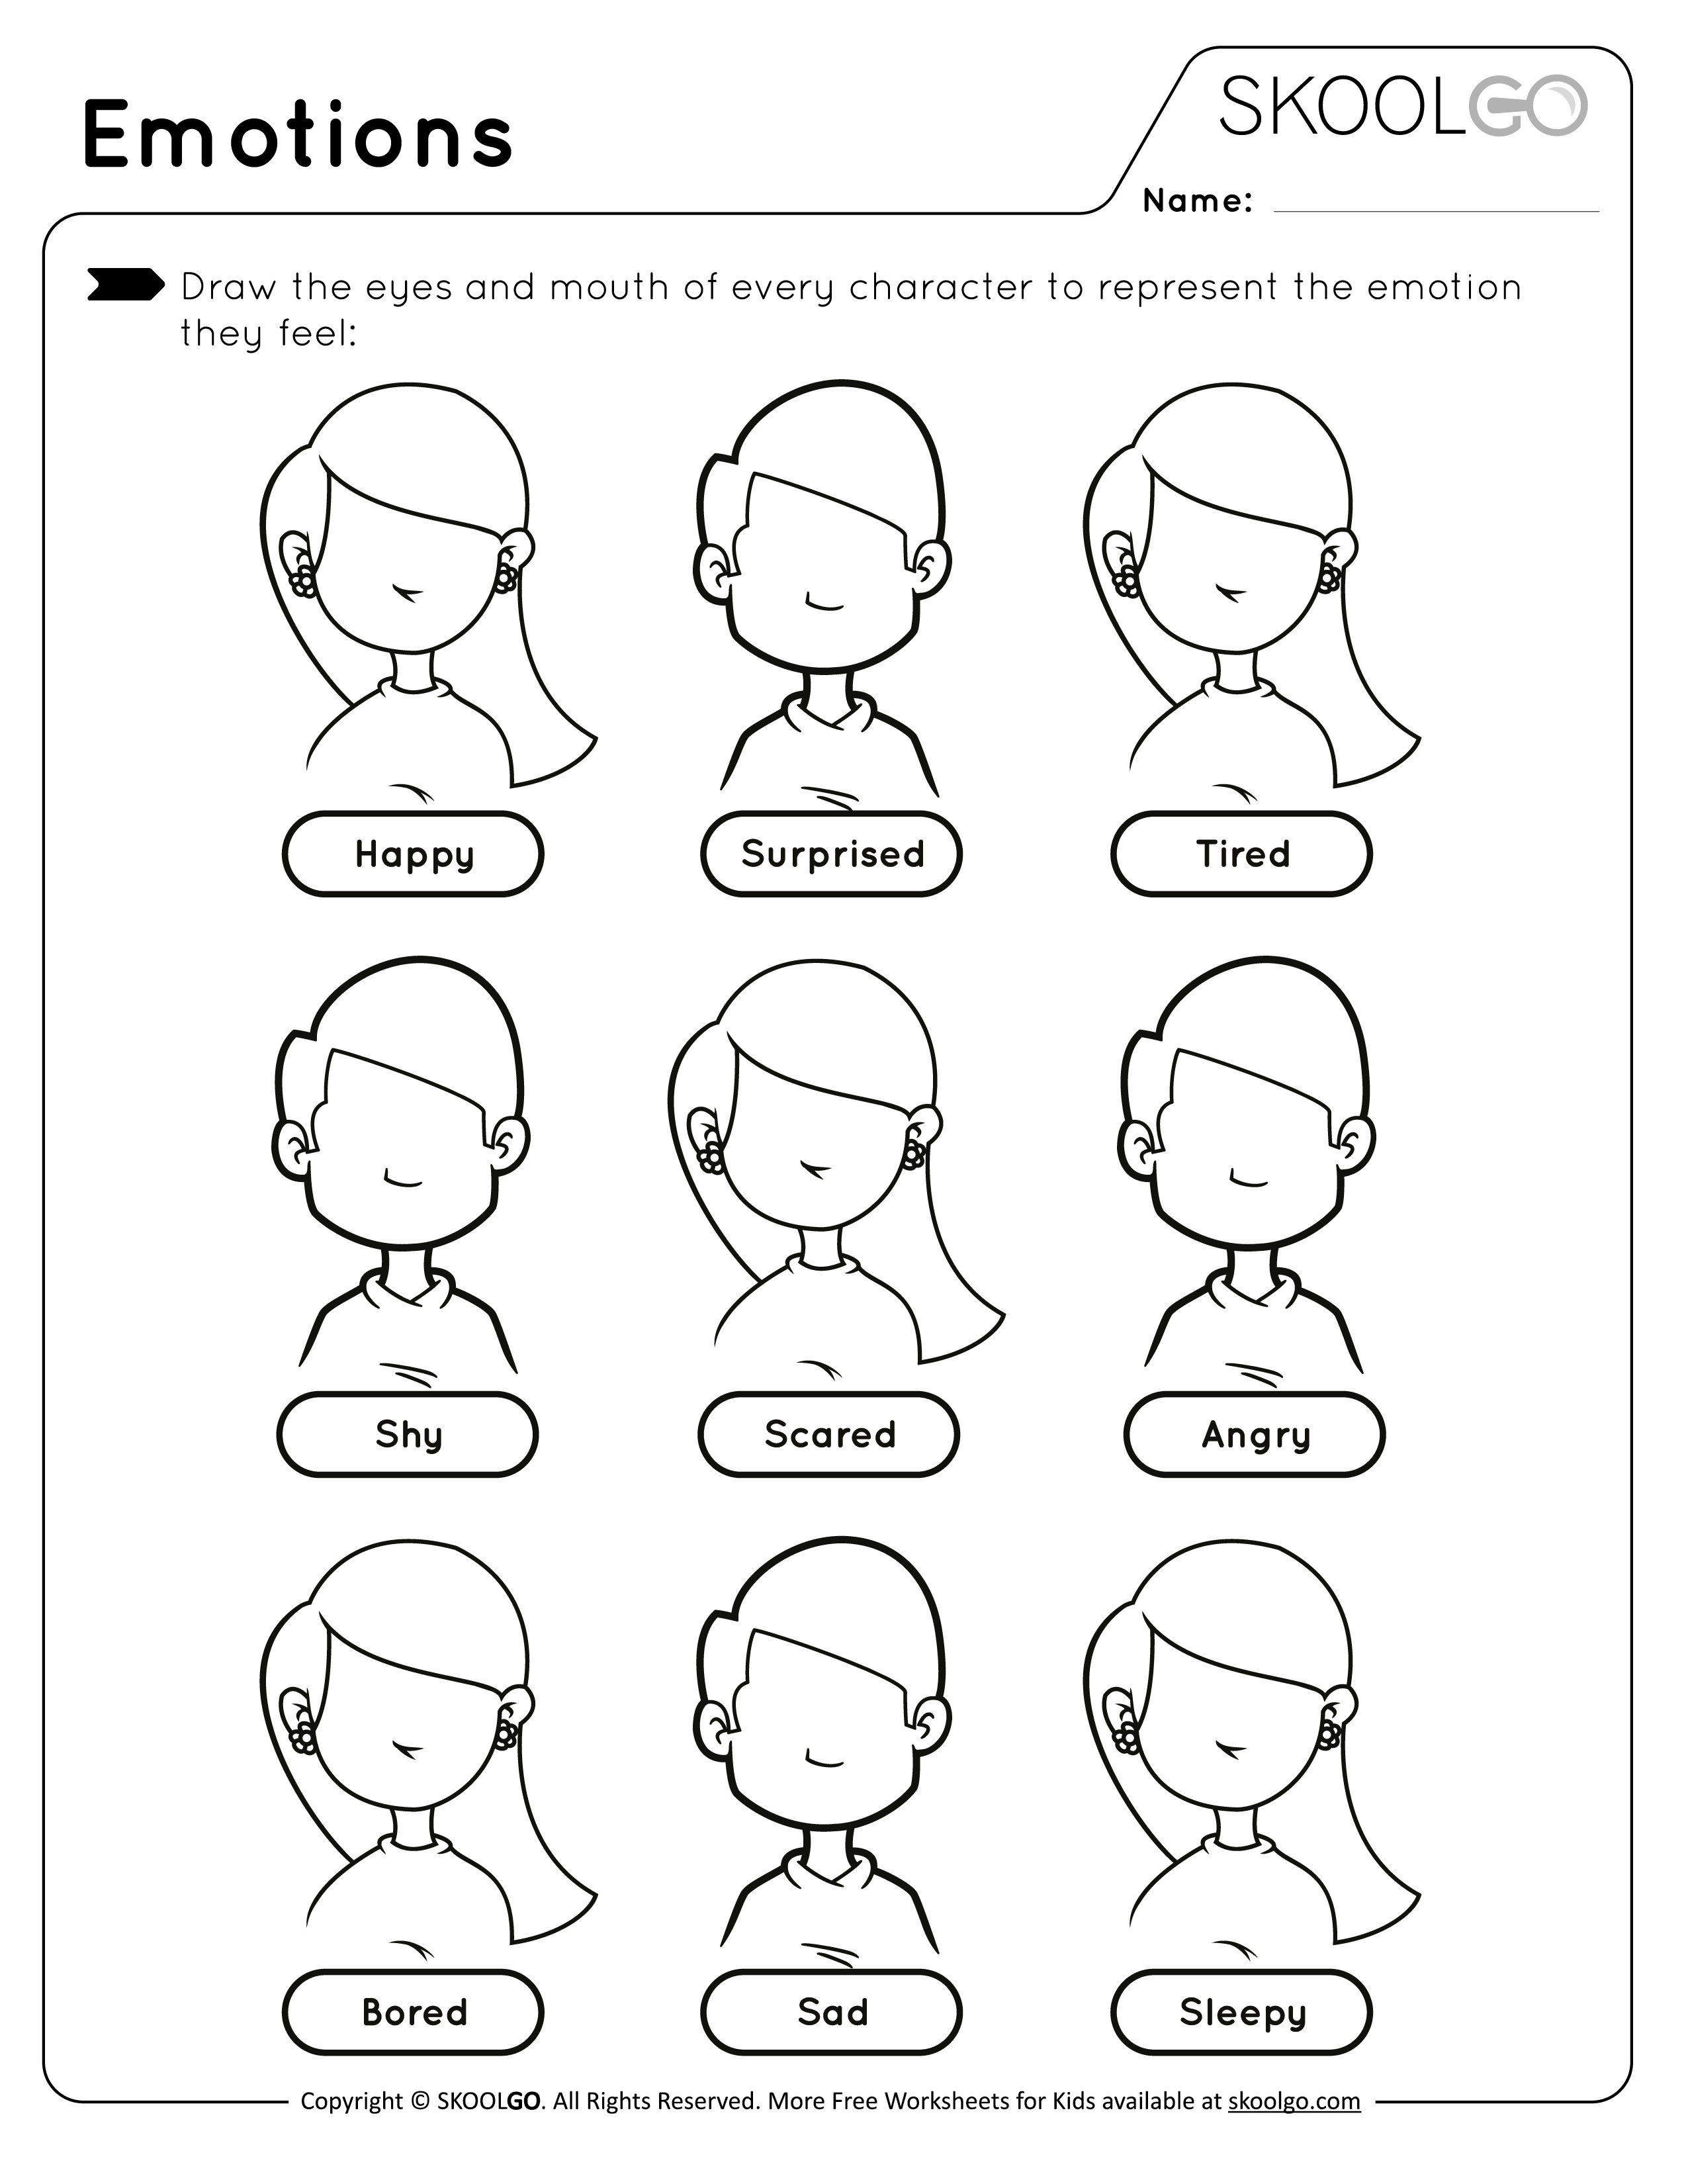 Free Emotions Worksheet for Kids - Black and White version